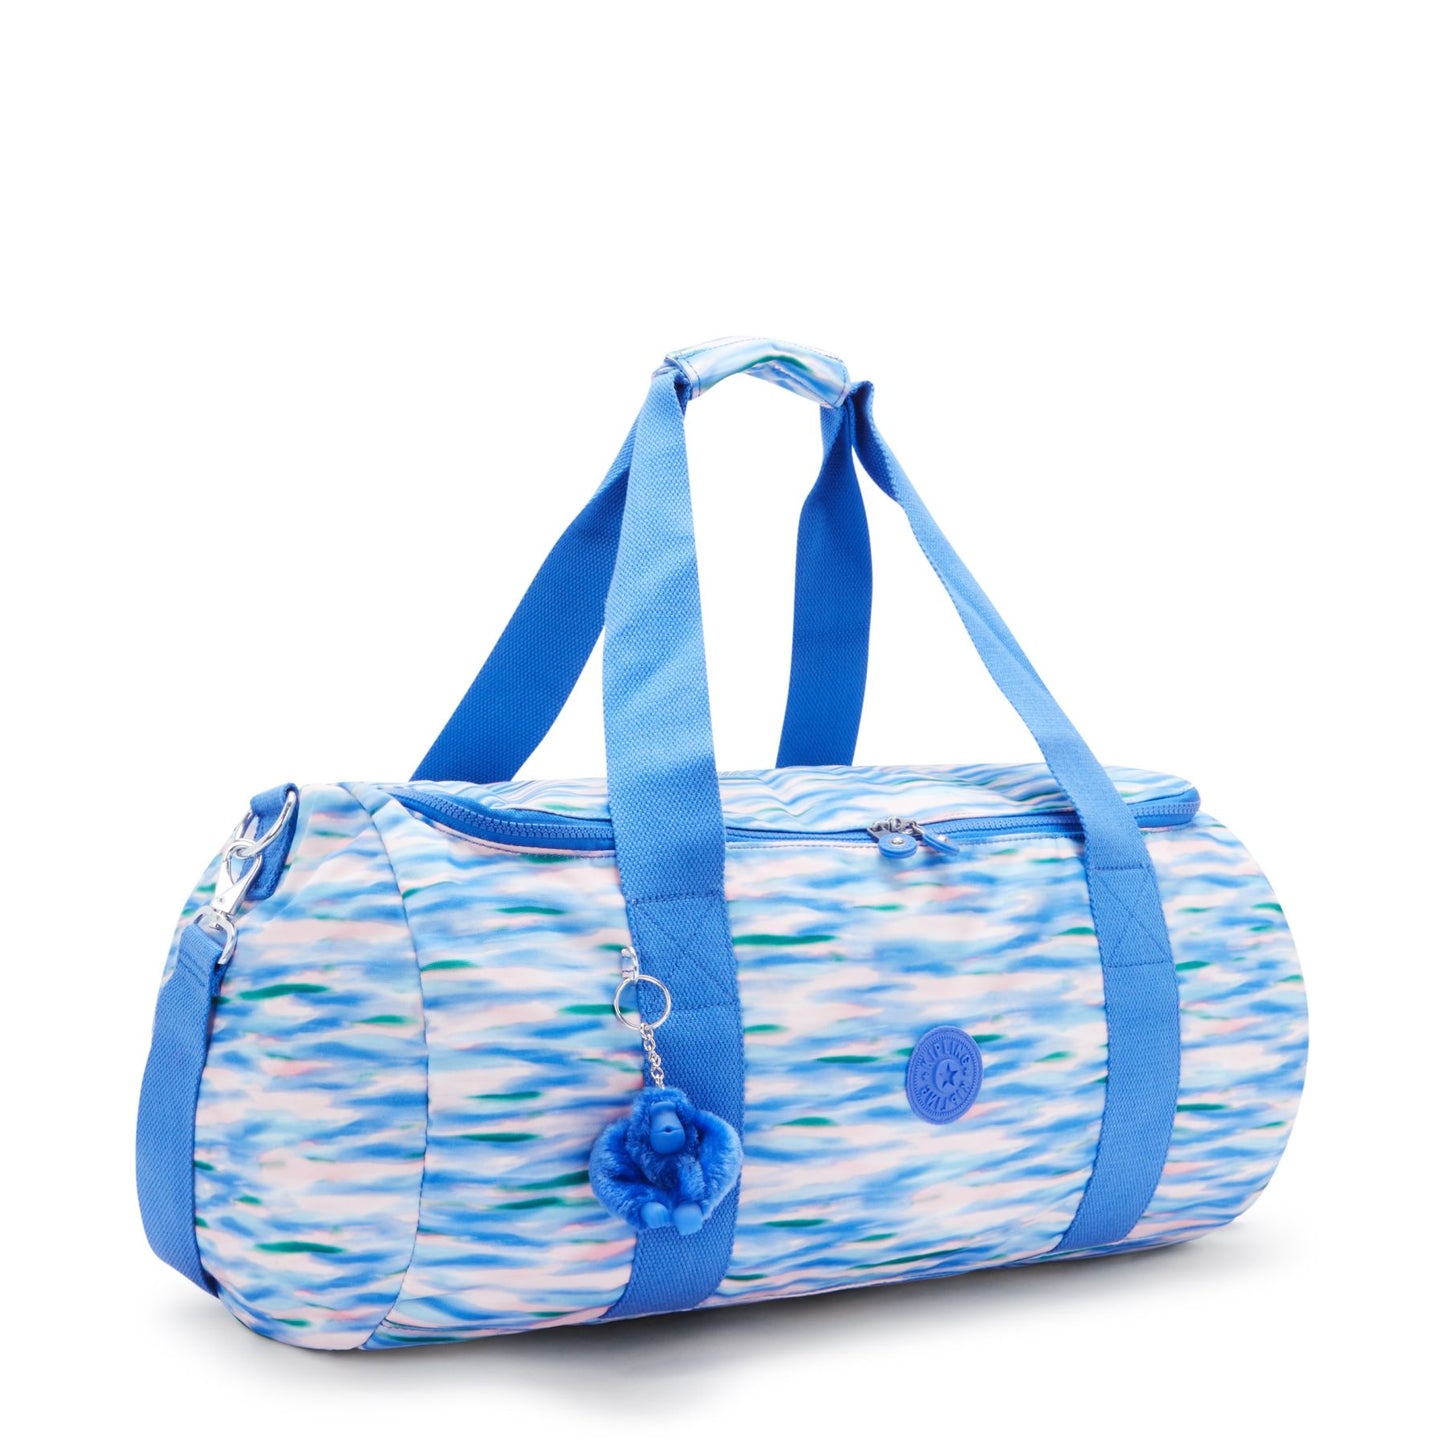 Kipling Argus S Diluted Blue Overnight Handbag